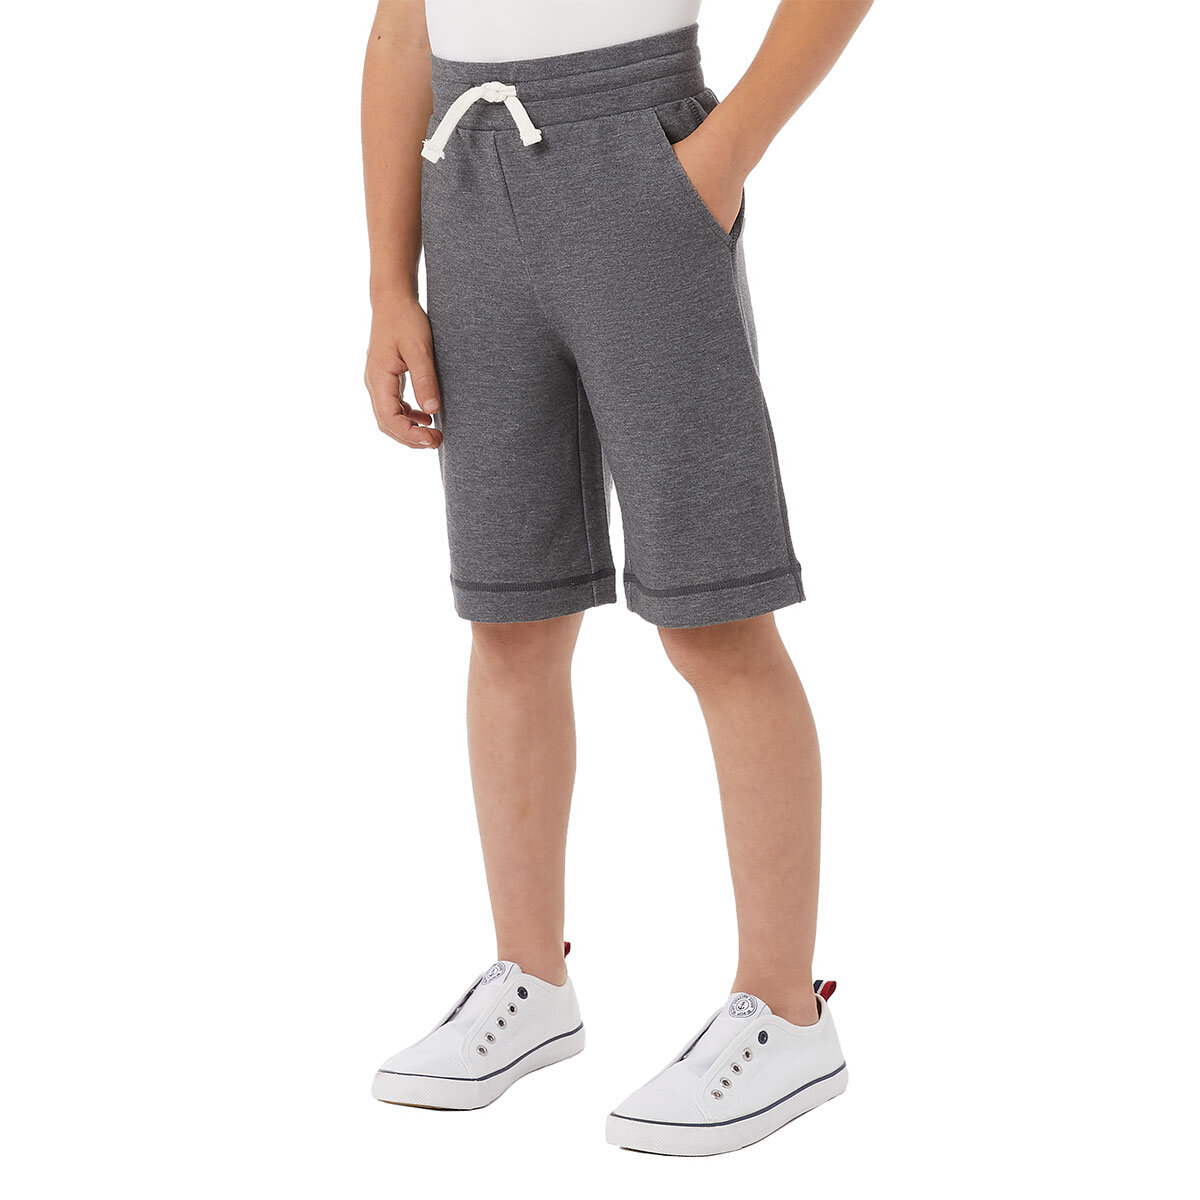 image of side of grey shorts